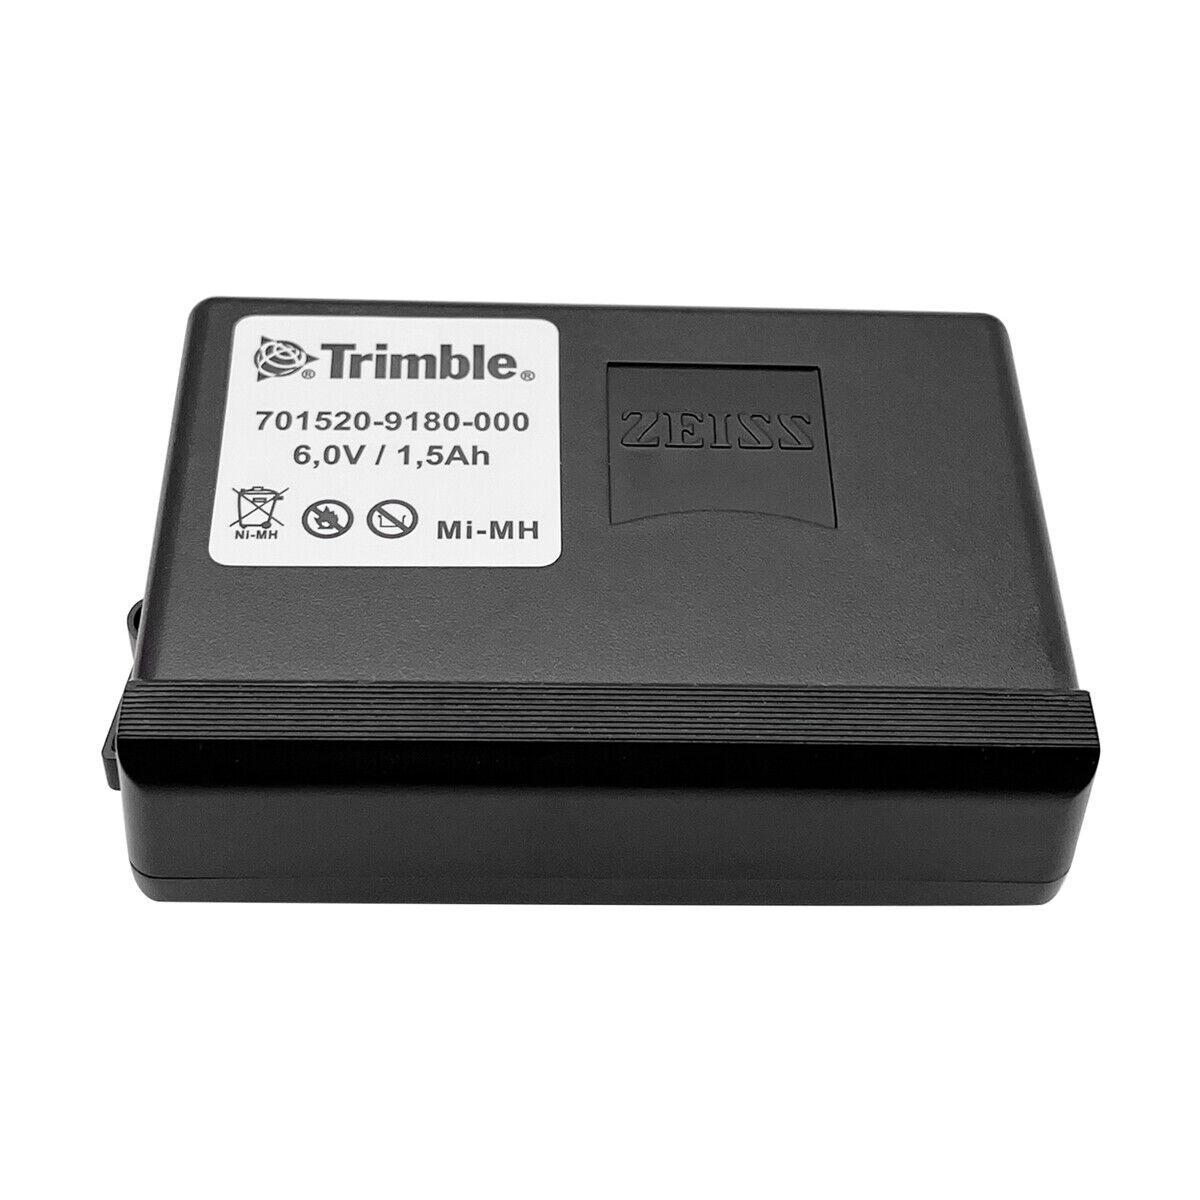 701520-9180-000 NIMH Battery for Zeiss Trimble DiNi 12 Geodetic Digital Level